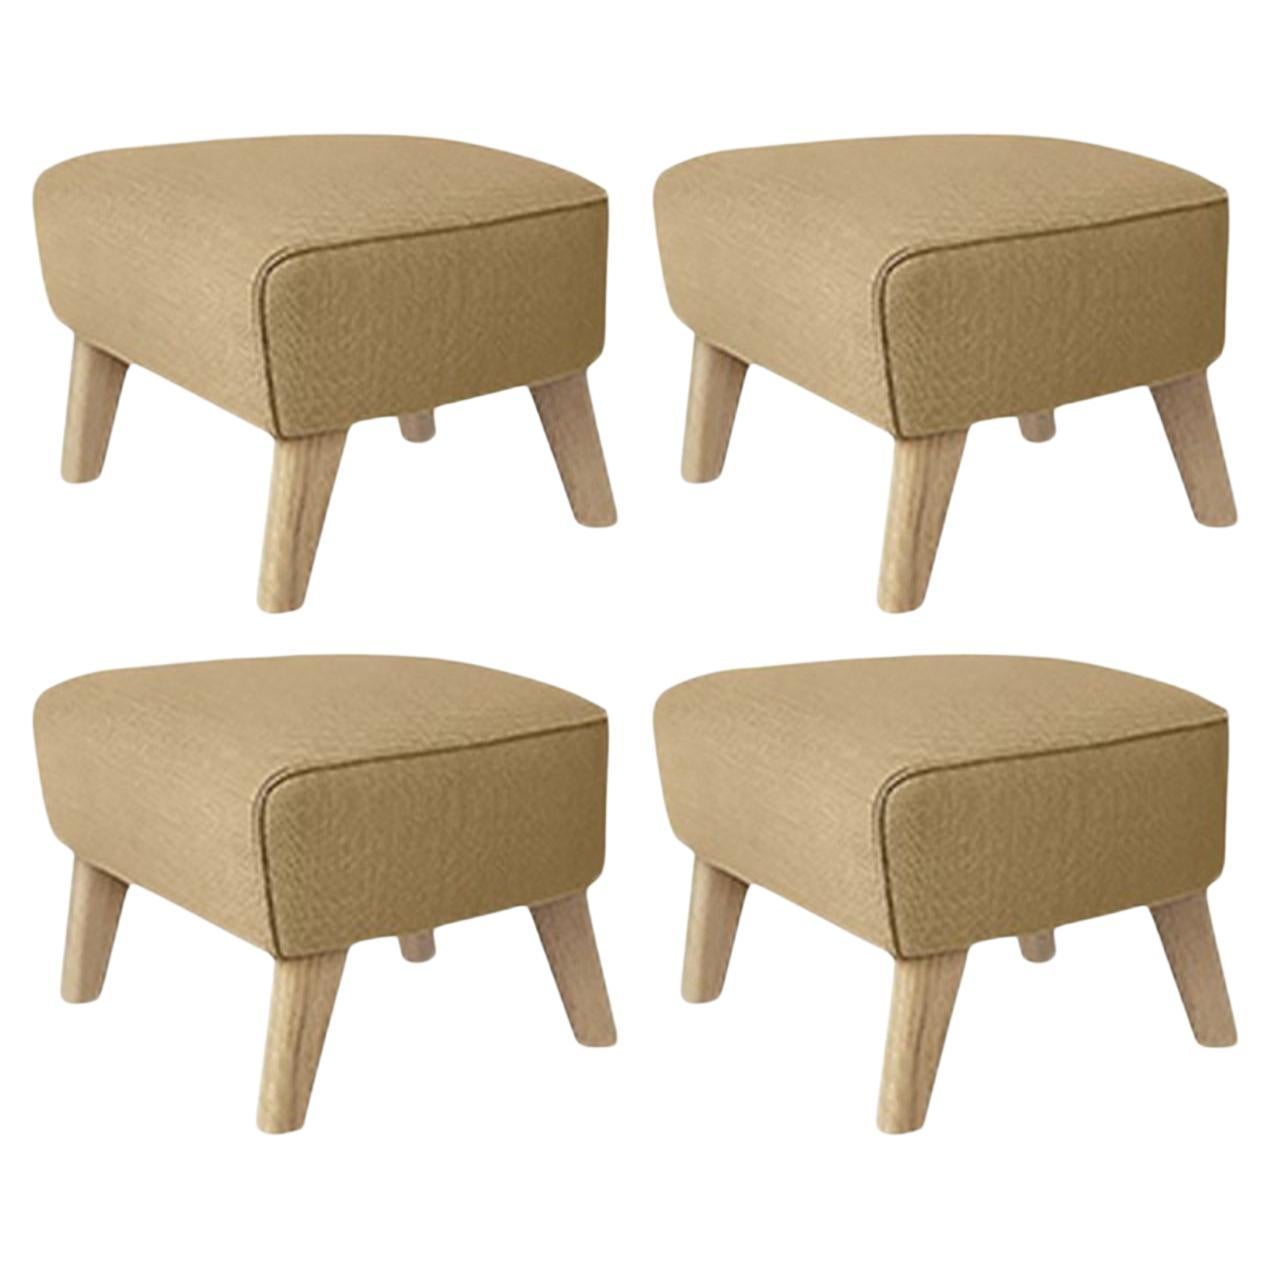 Set of 4 Sand, Natural Oak Raf Simons Vidar 3 My Own Chair Footstool by Lassen